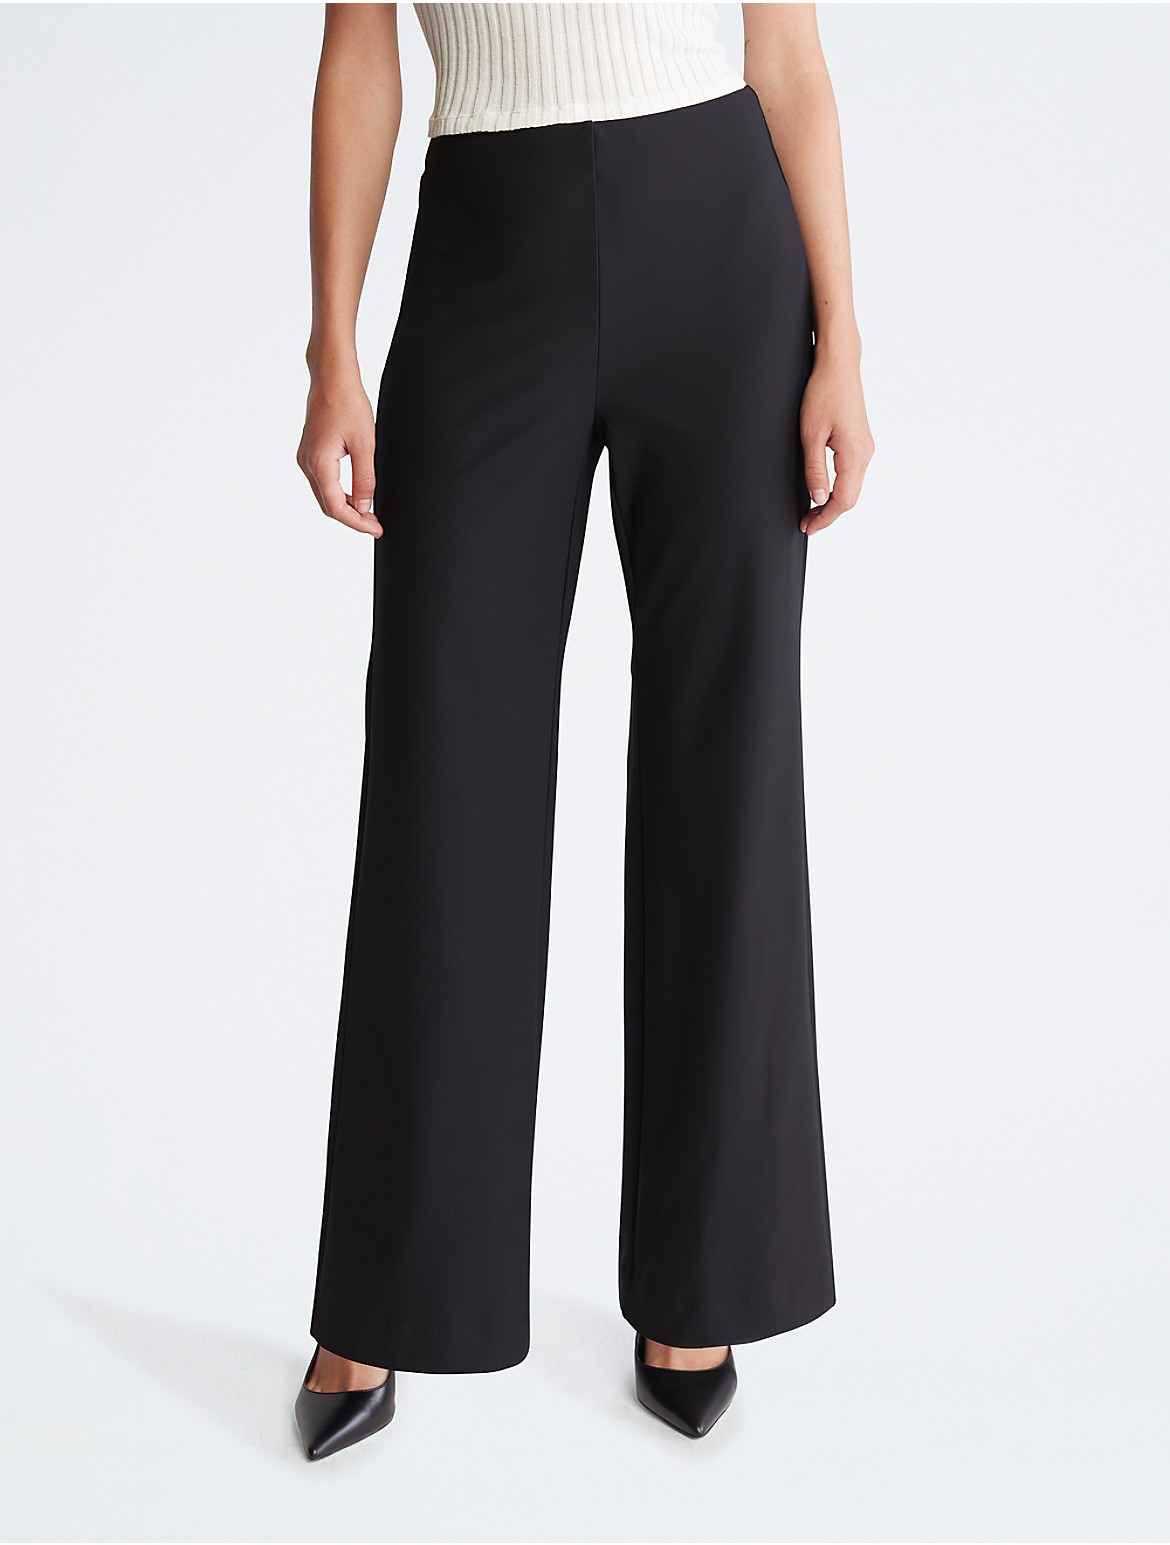 Calvin Klein Women's Scuba Flared Pants - Black - XS